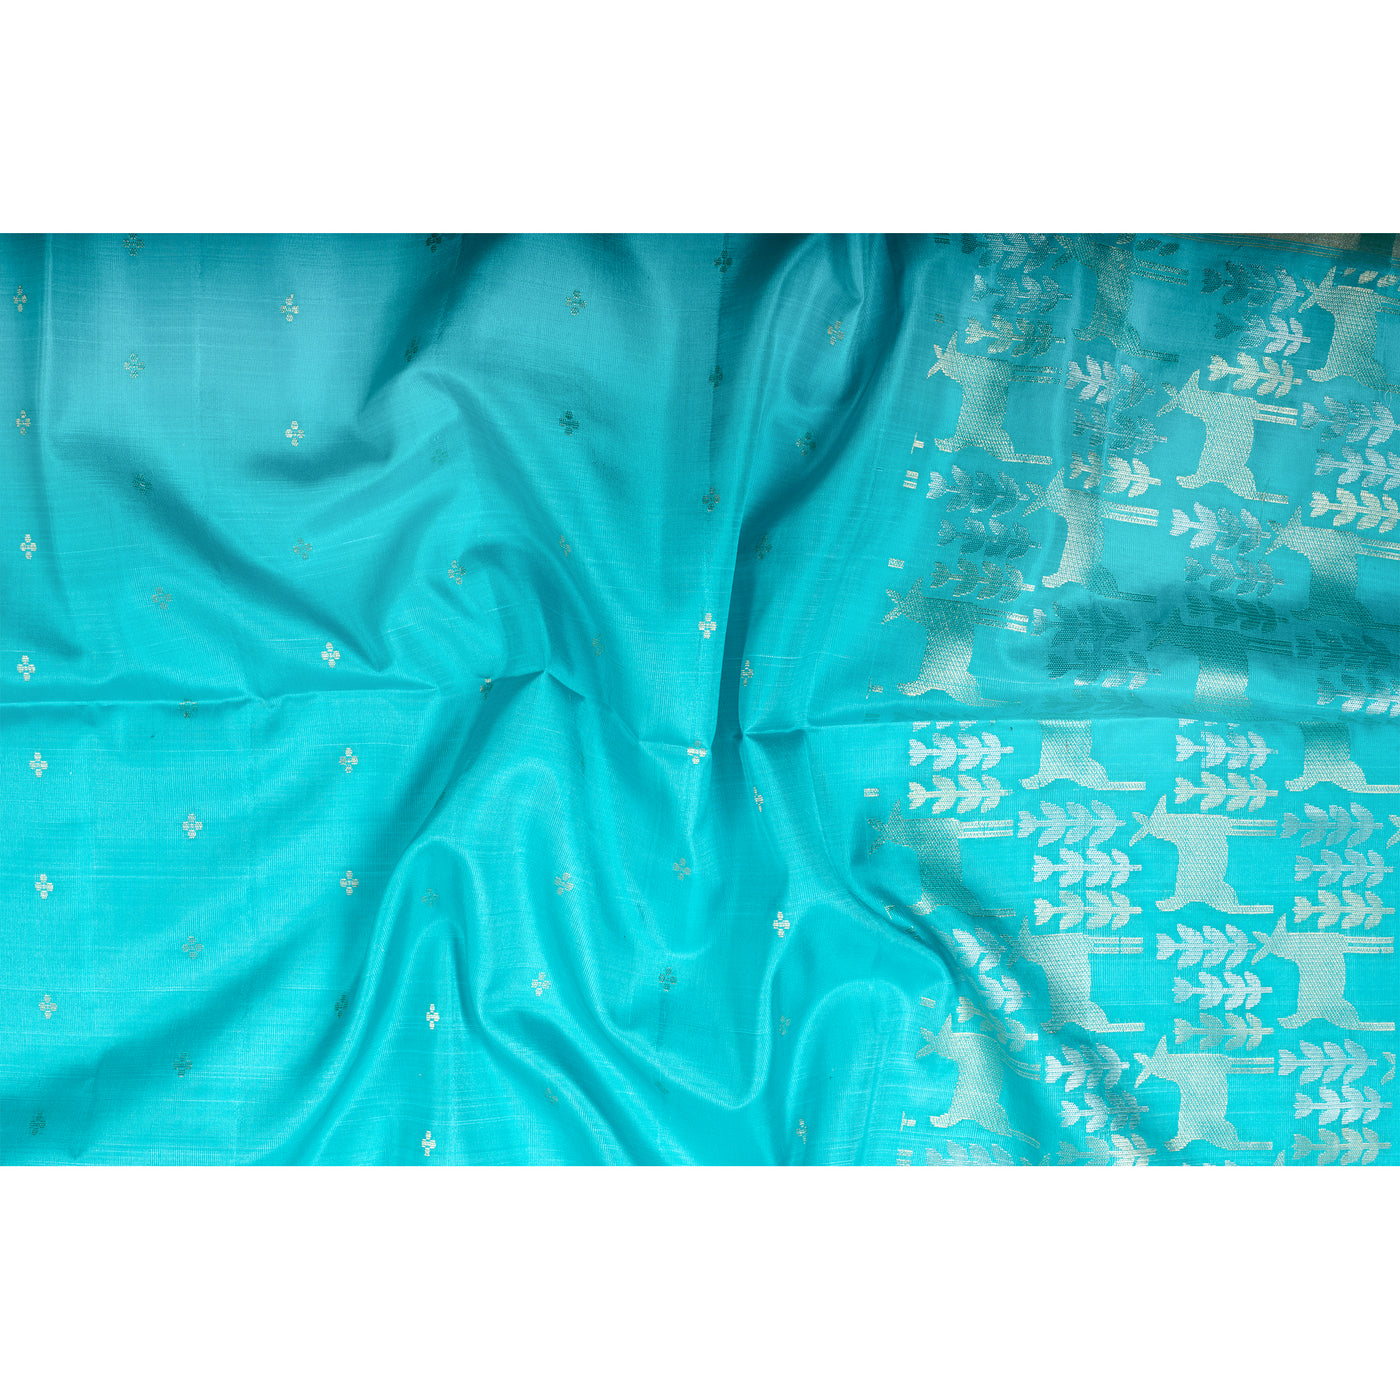 Sky blue handloom silk dupatta with floral butti